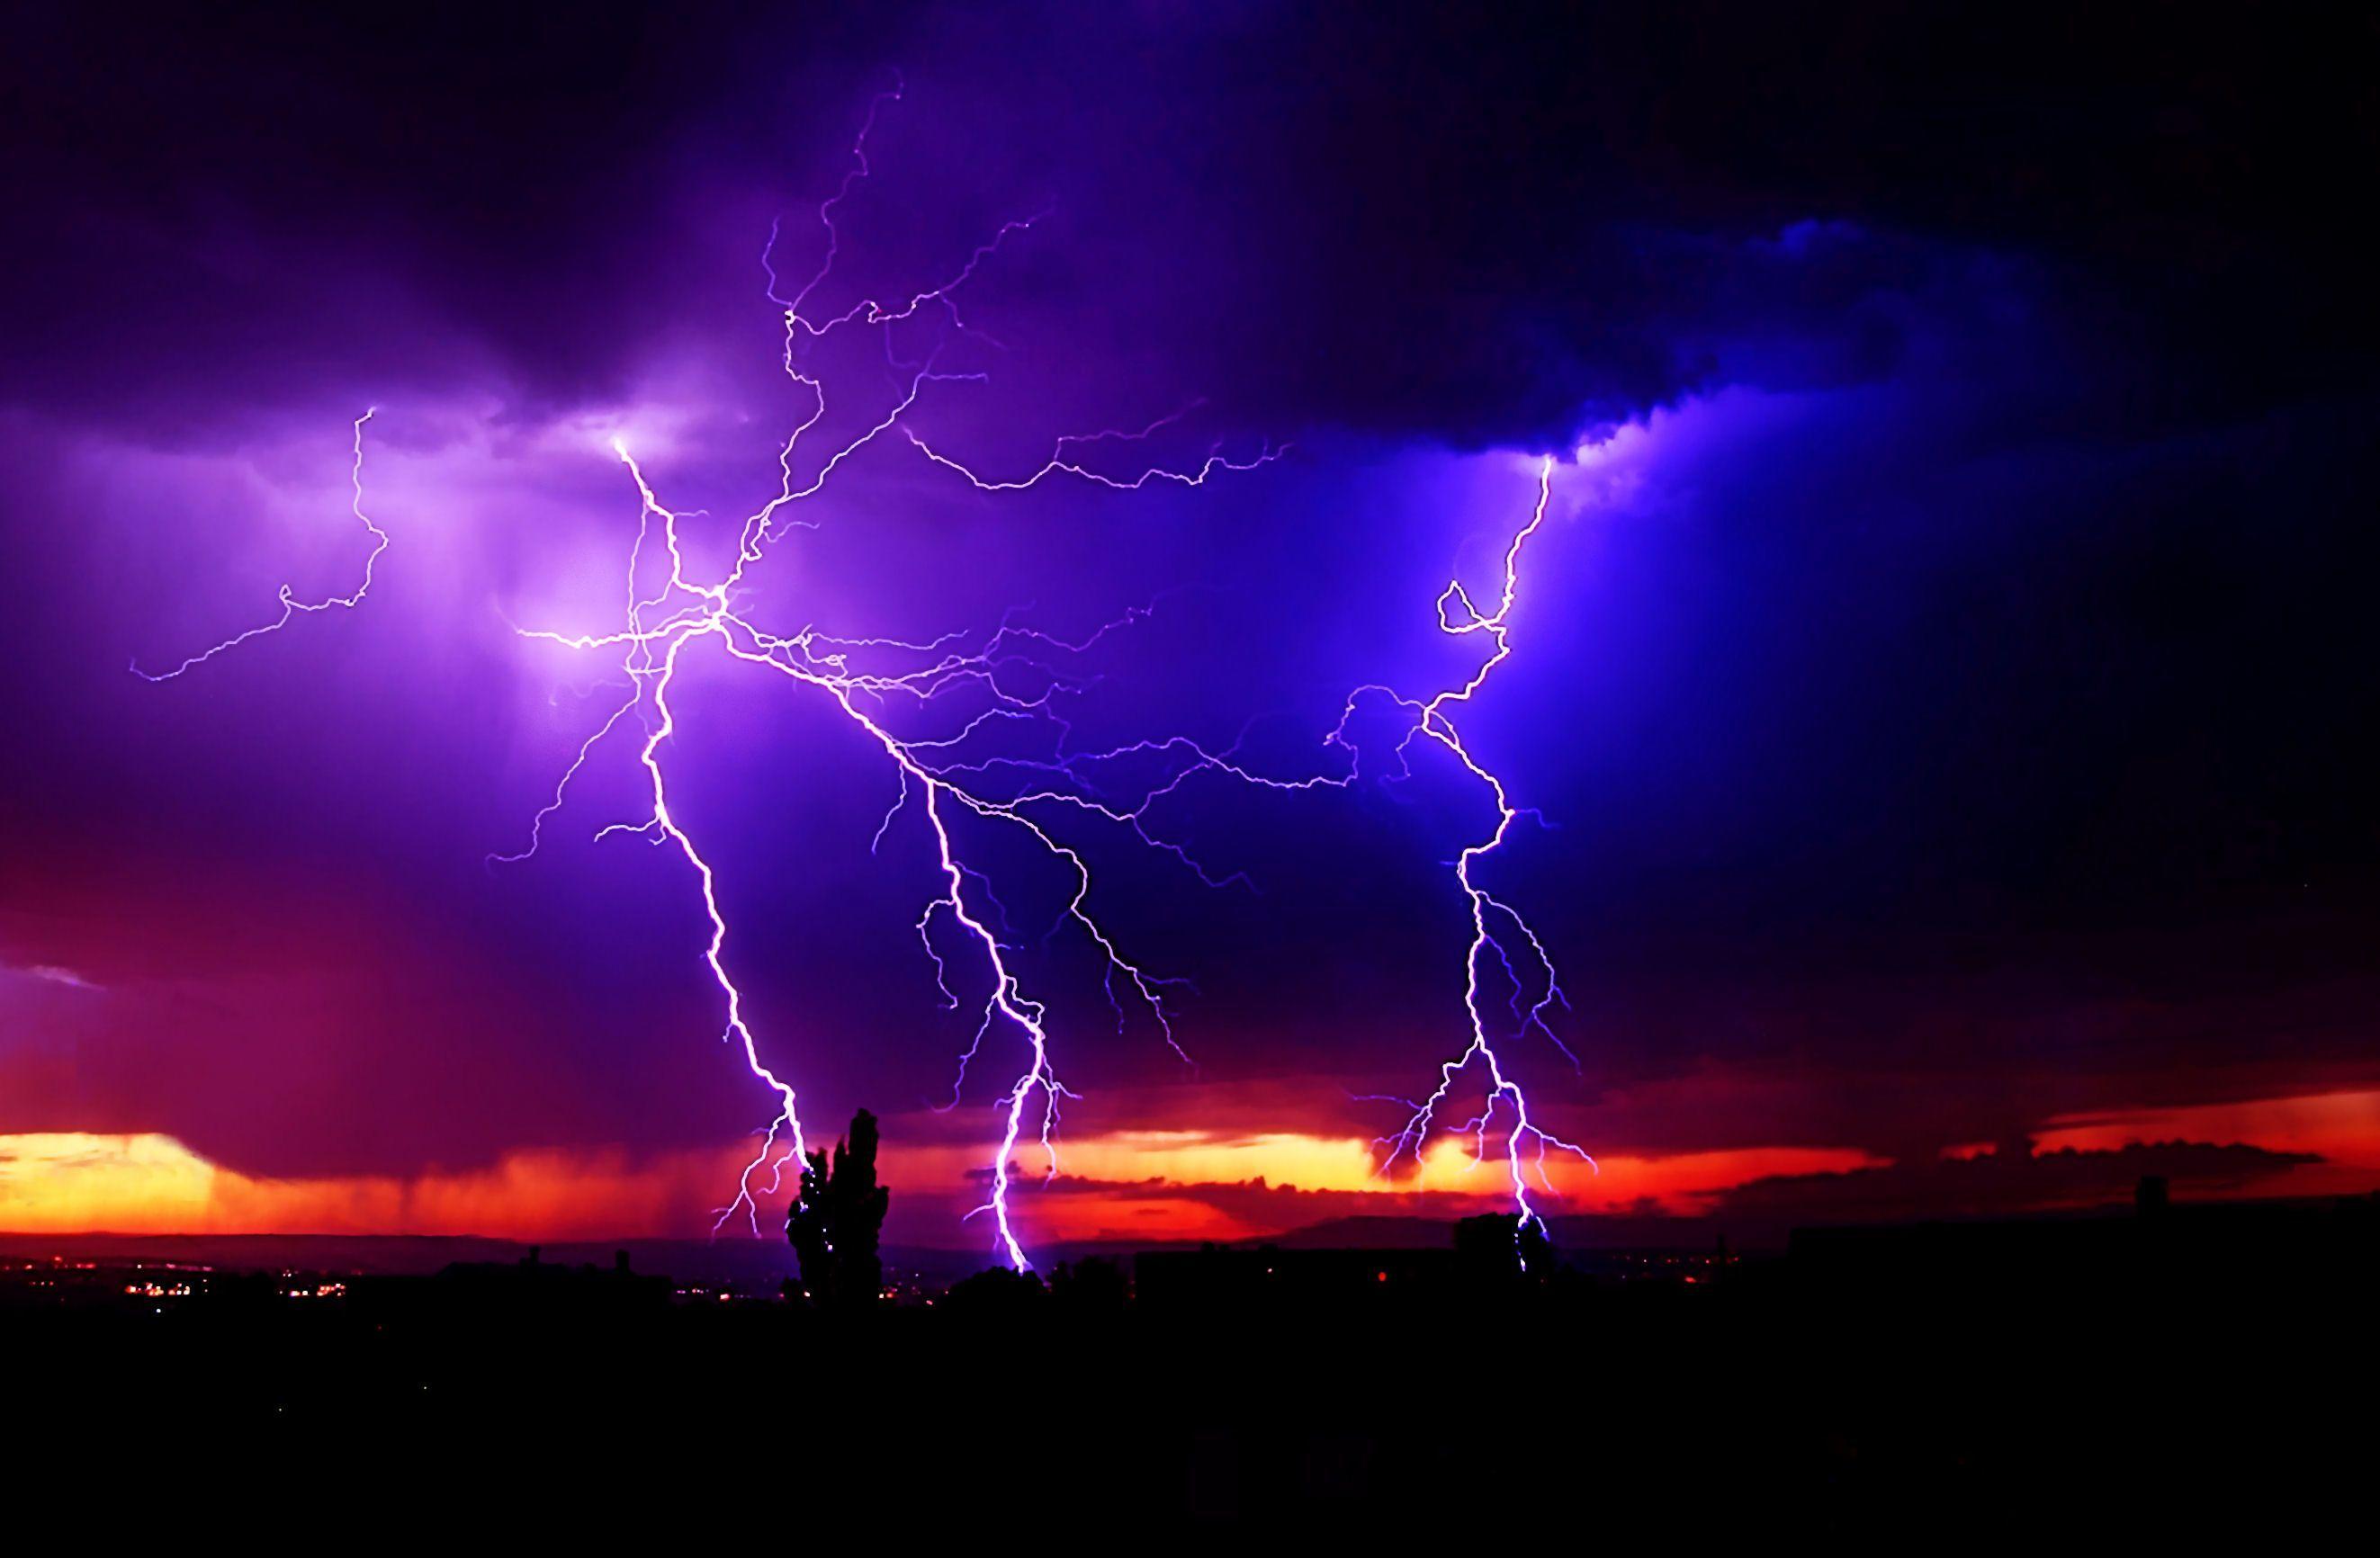 Impressive Lightning Storms for your Desktop Wallpaper. Thomas